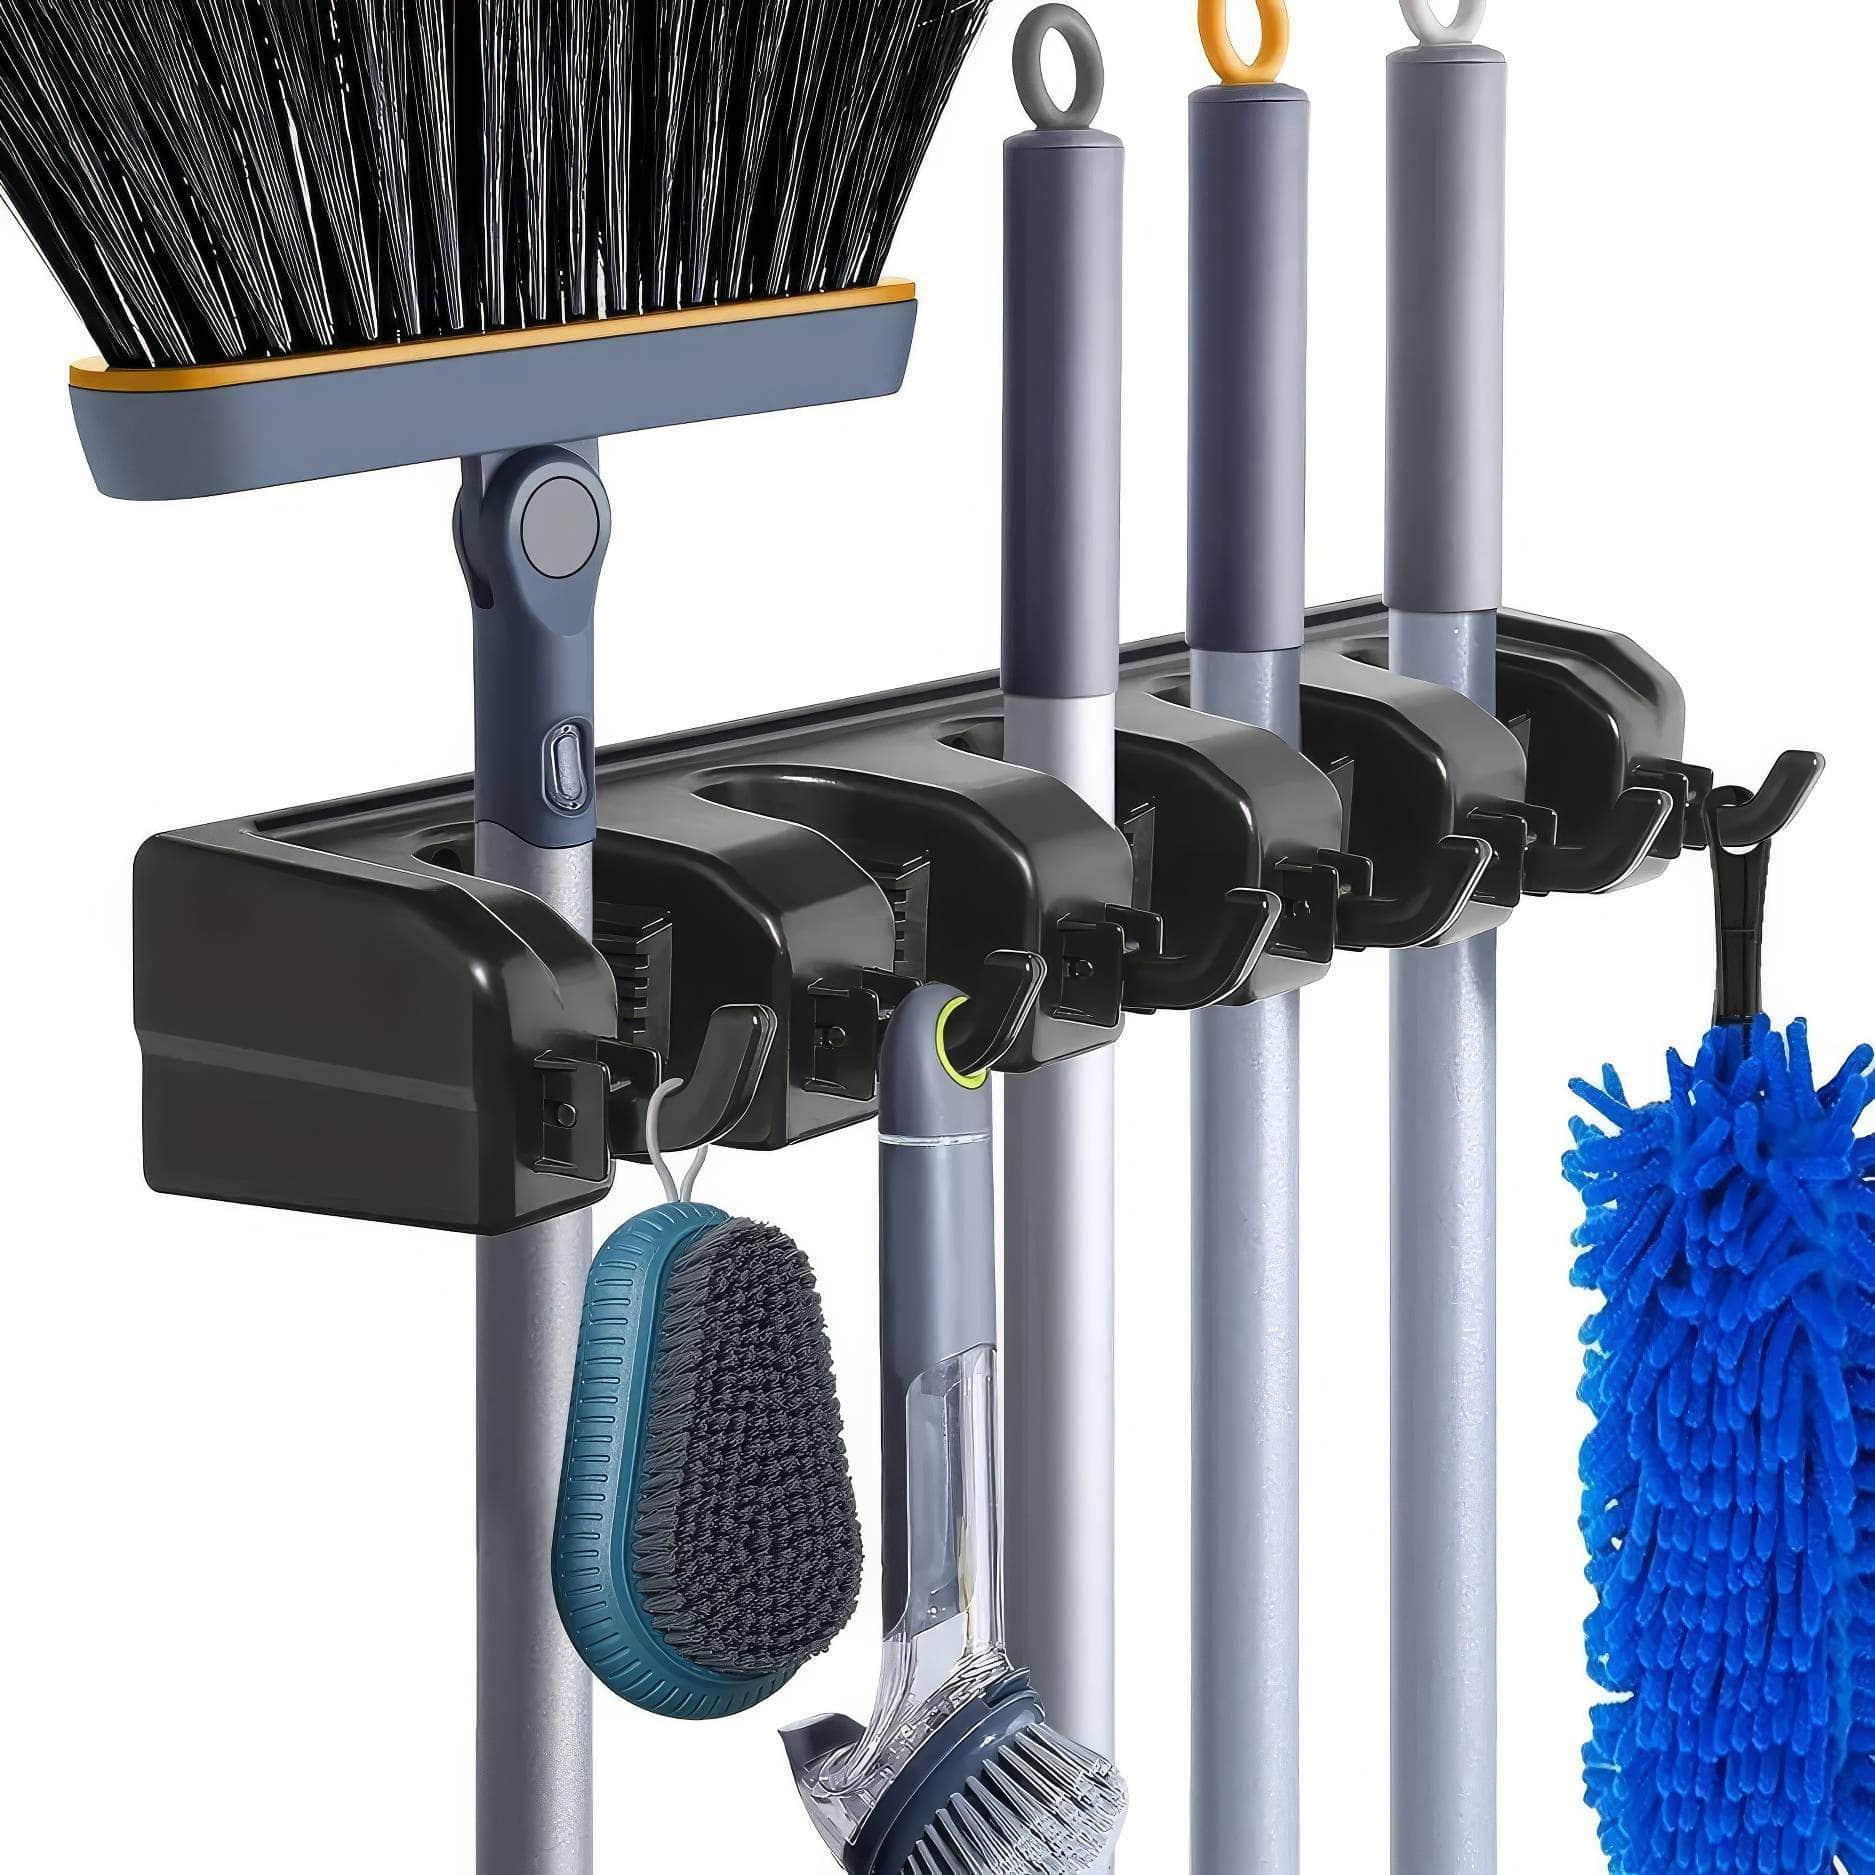 Black Magic Plastic Mop Holder - Wall Mounted, 3/4/5 Position Multi-Functional Broom Hanger Shelf for Home Kitchen Storage